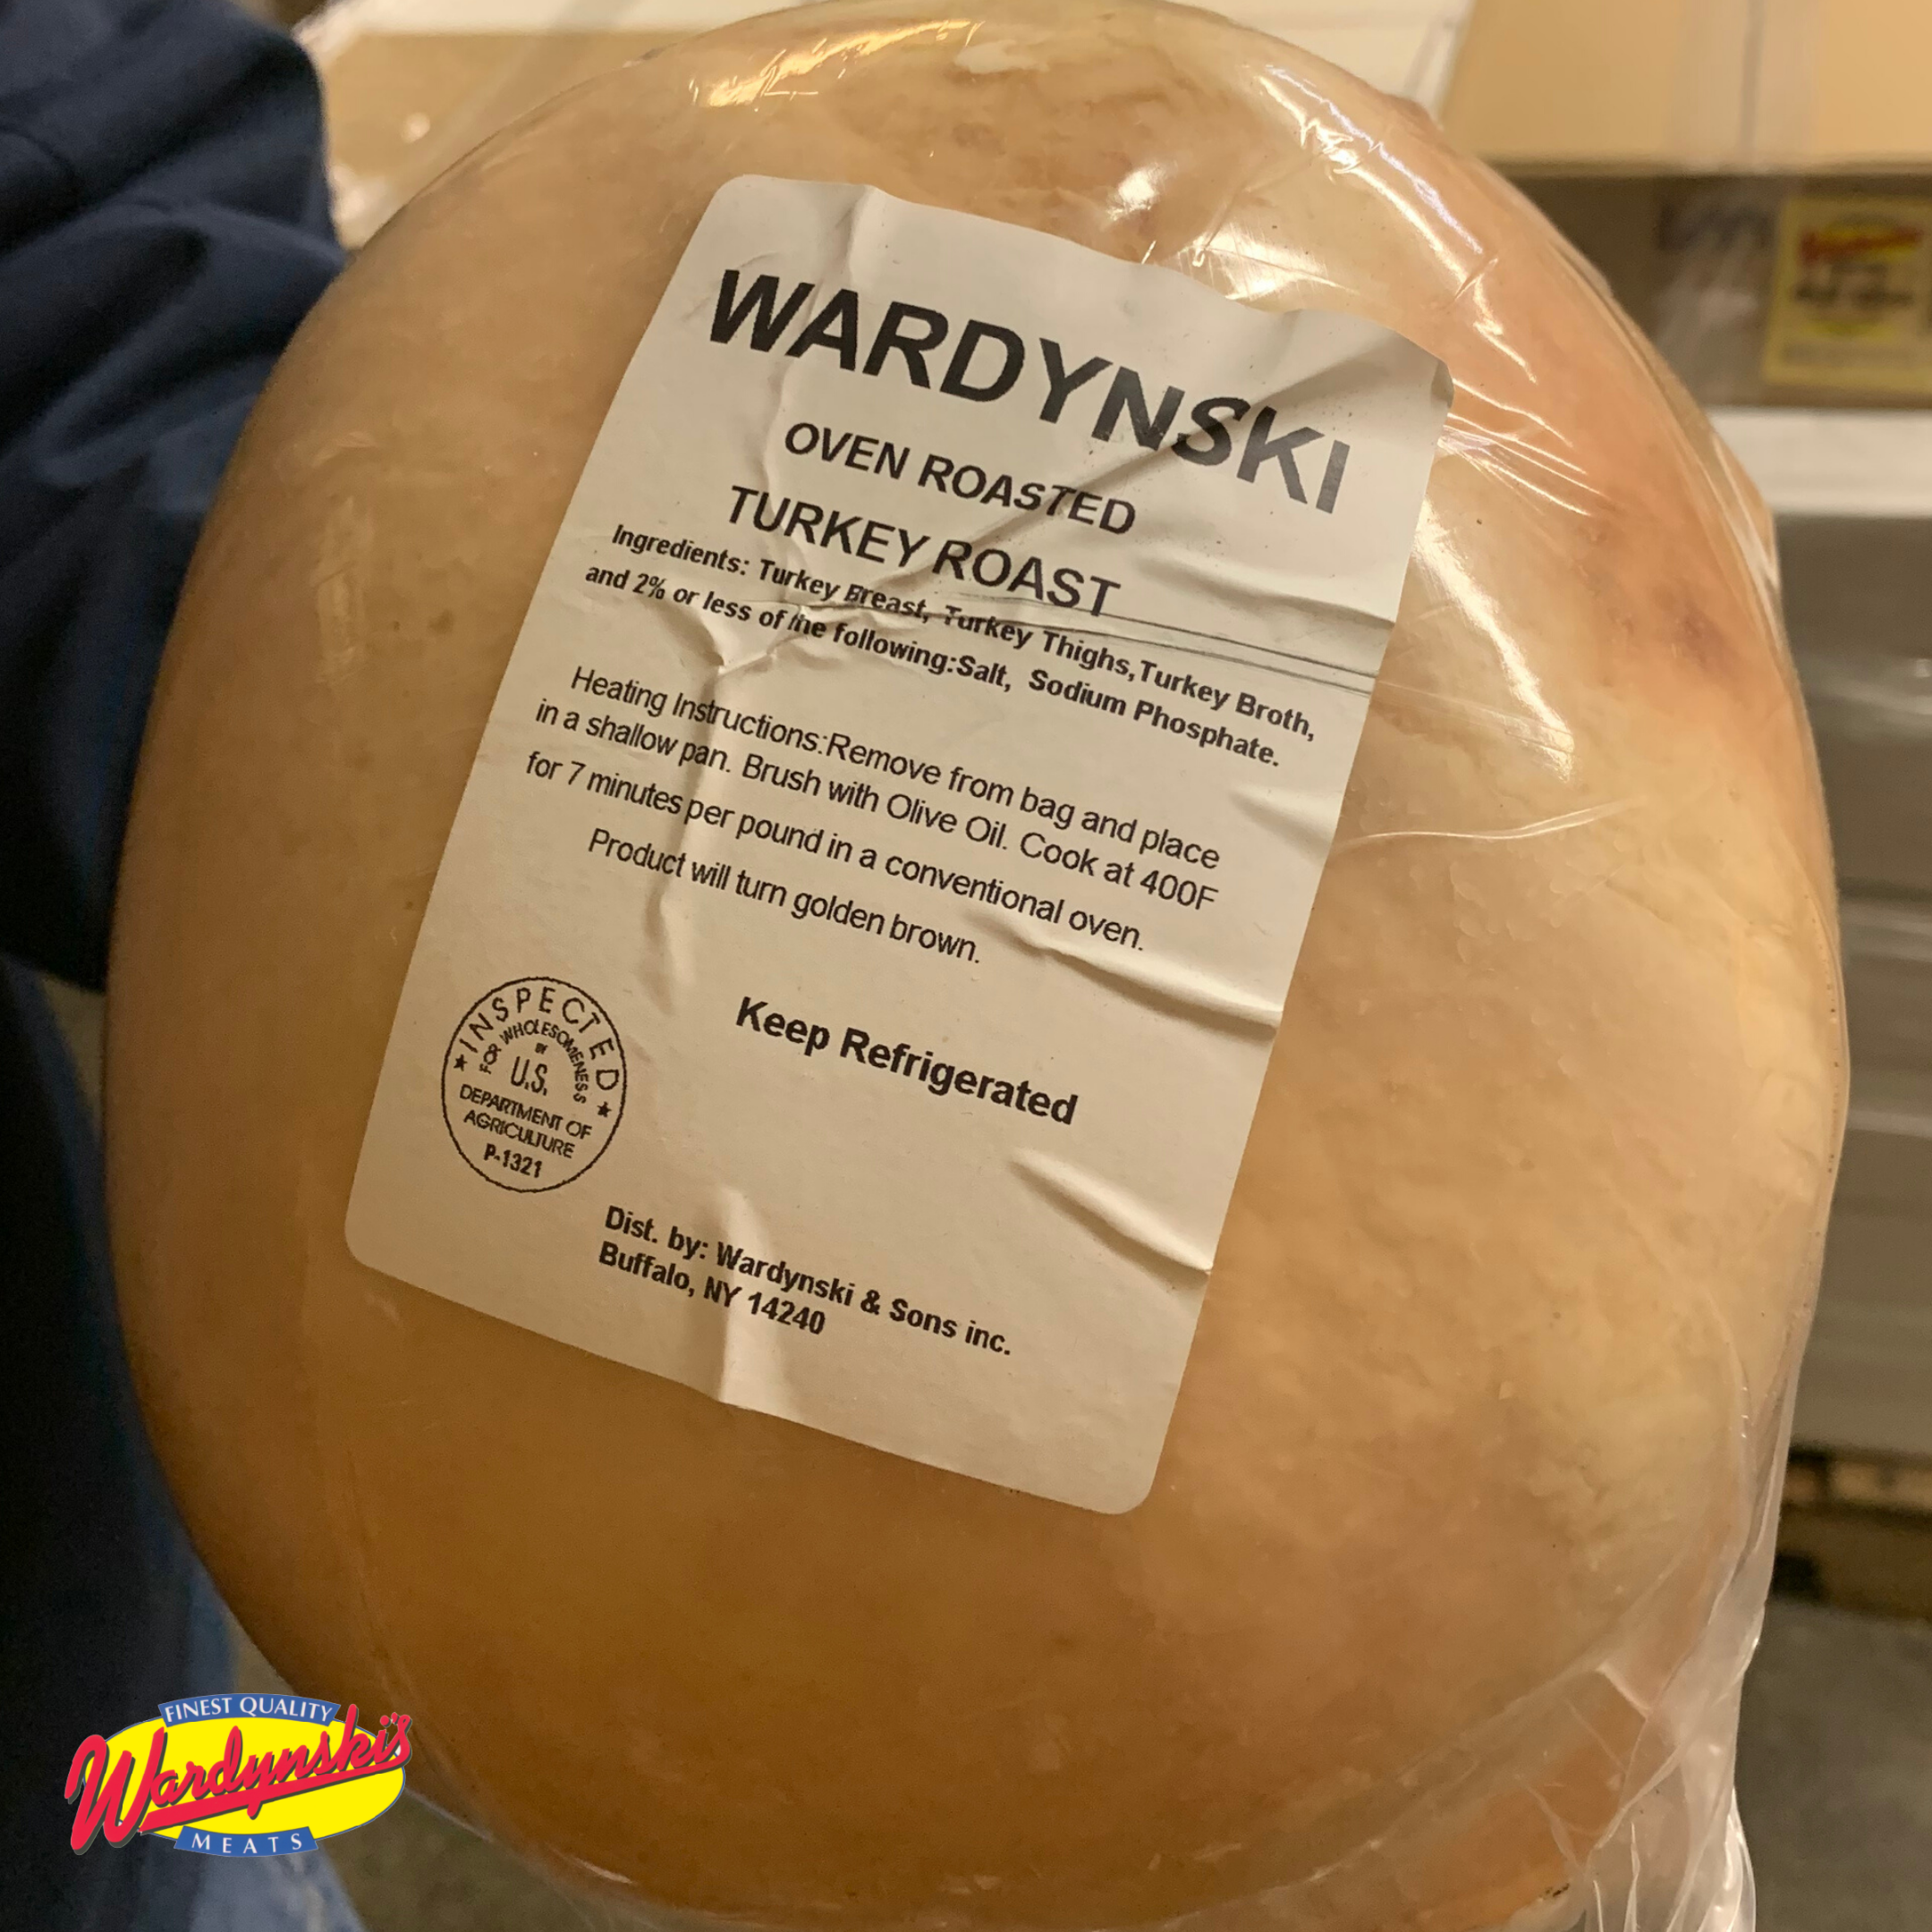 Wardynski Turkey